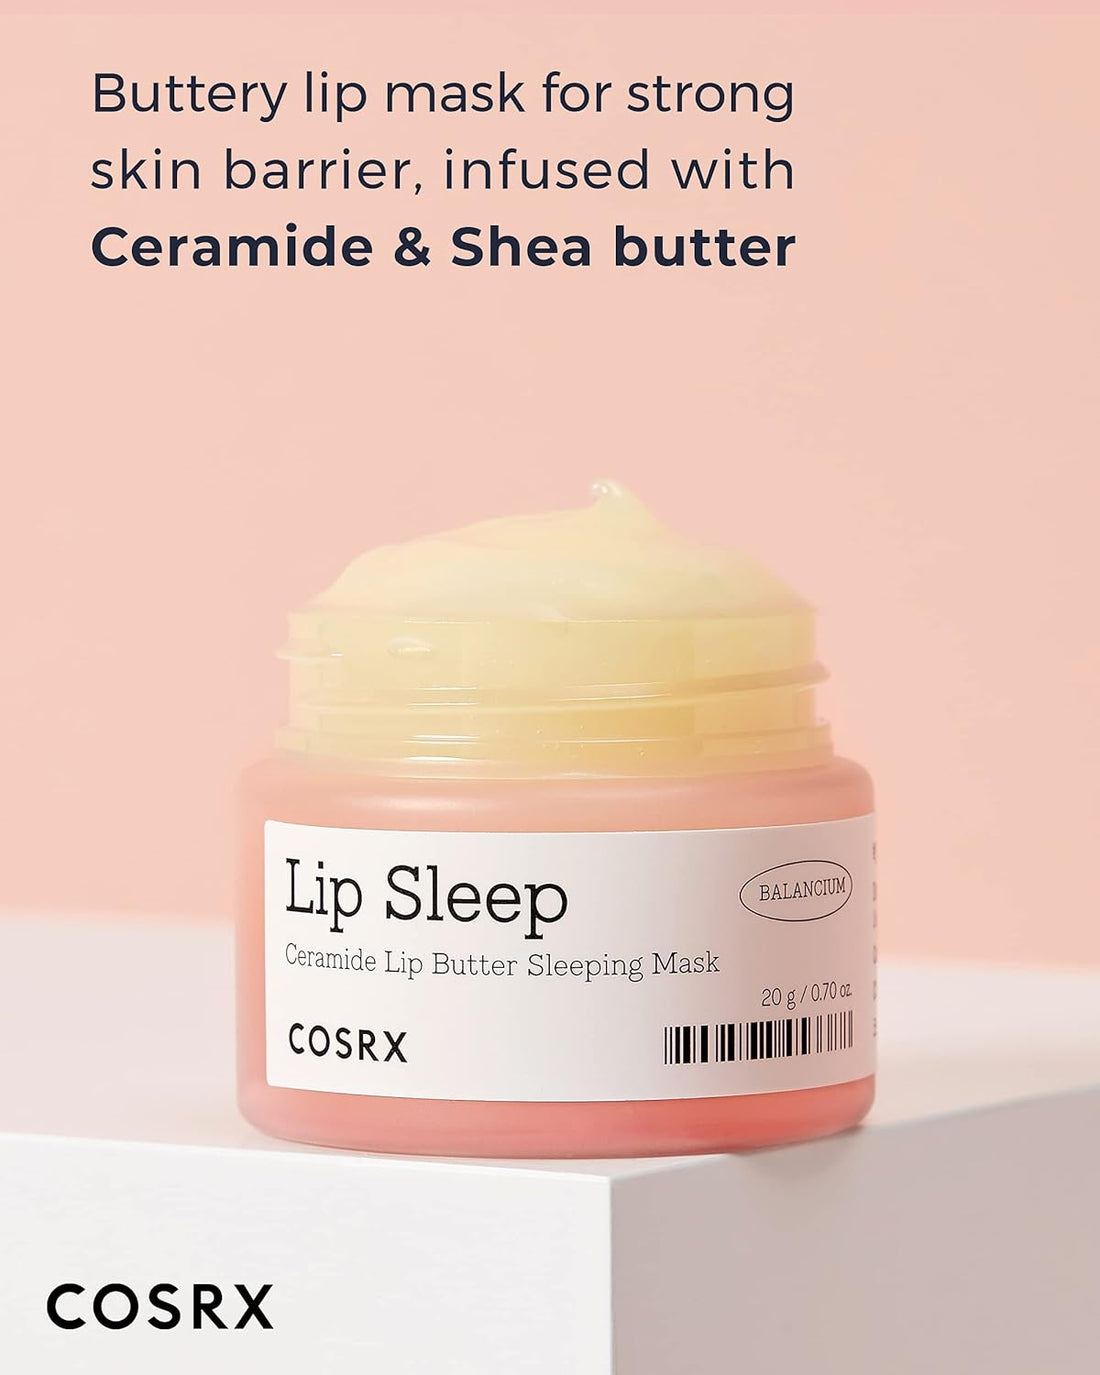 COSRX Balancium Ceramide Lip Butter Sleeping Mask